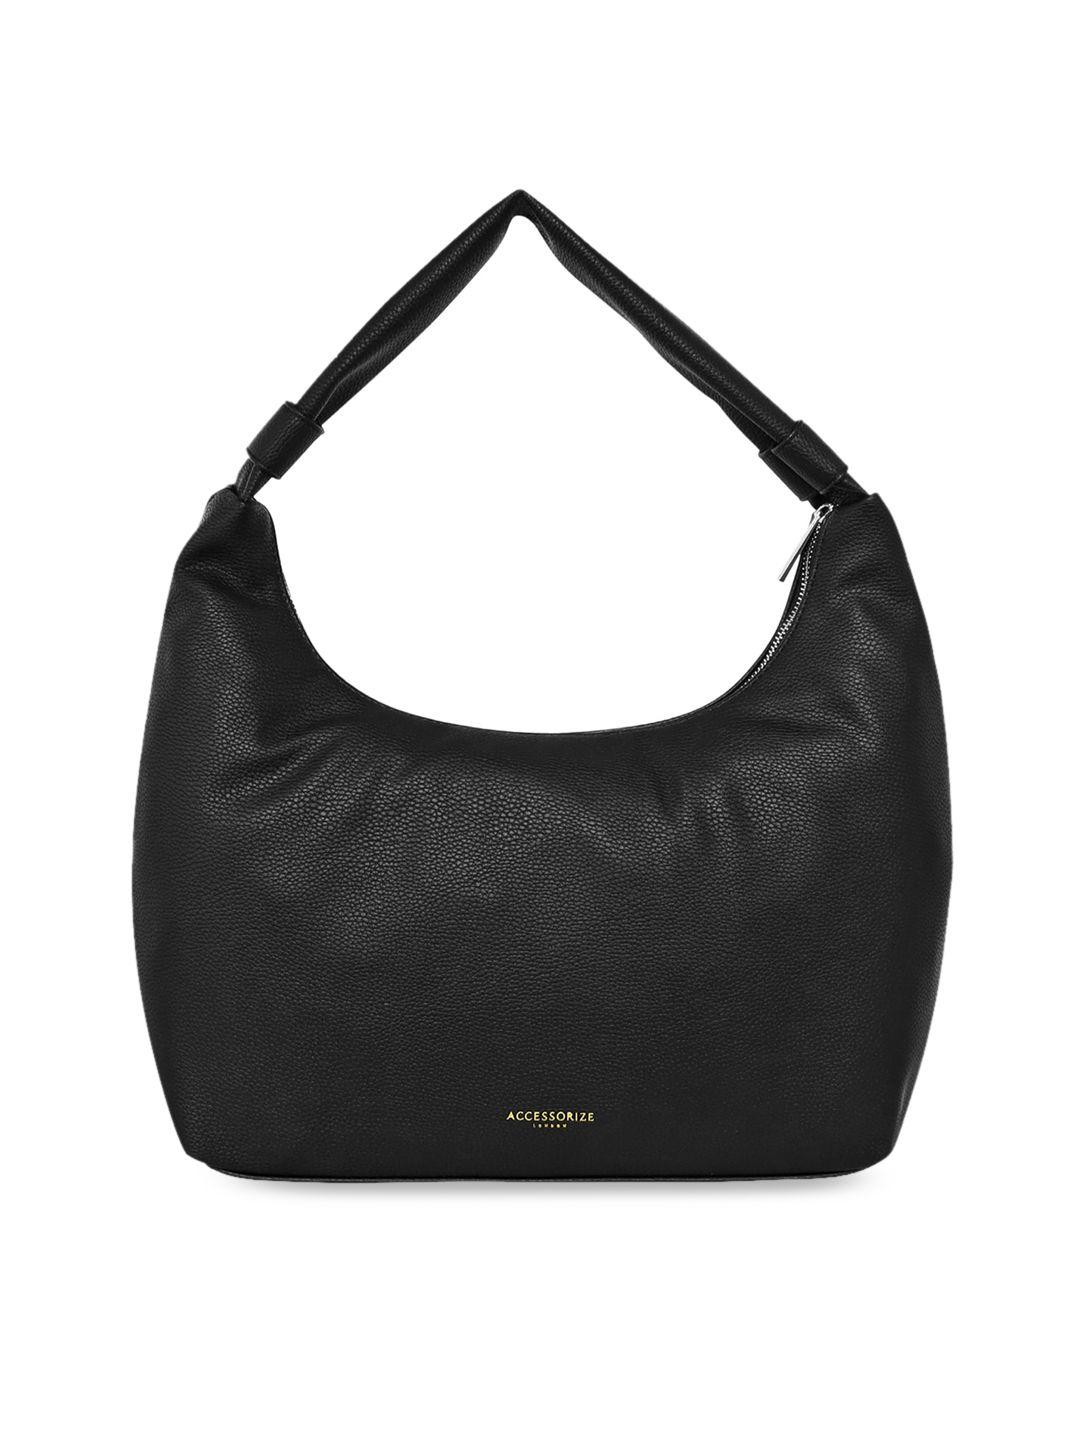 accessorize london women faux leather large scoop hobo bag